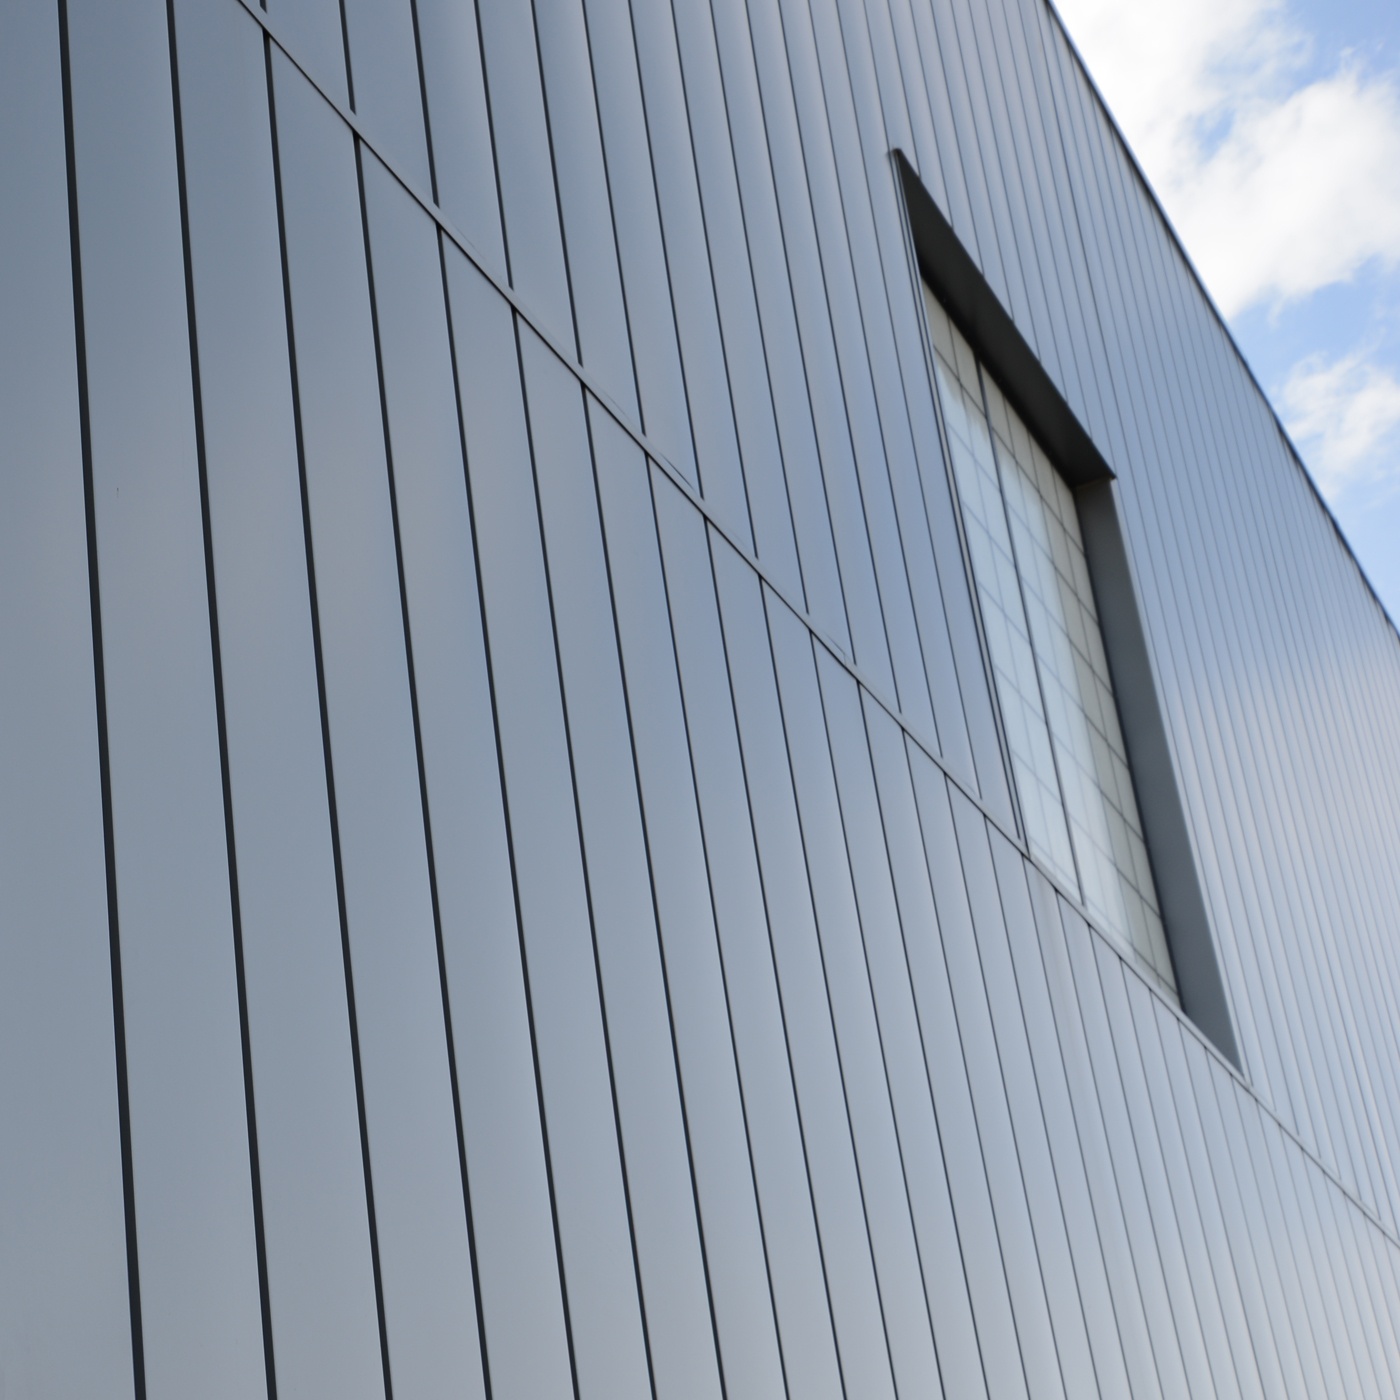 Steel Siding - Exterior Metal Wall Panels